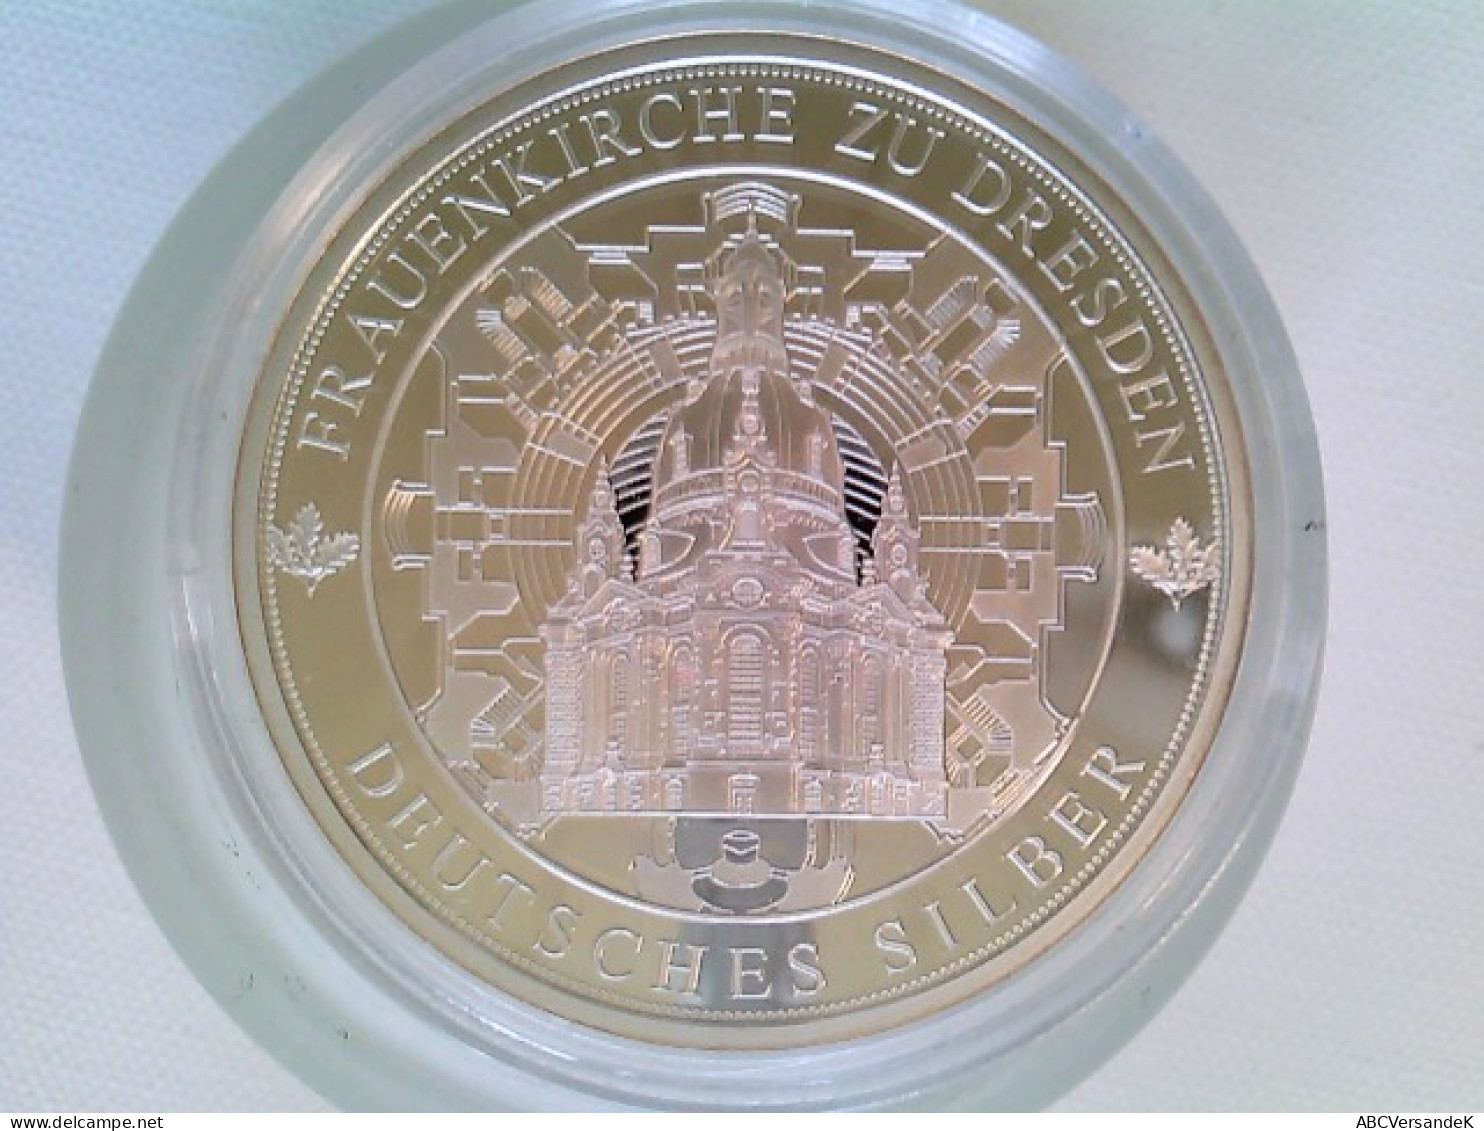 Medaille, Frauenkirche Zu Dresden, 333/1000 Silber, Ca. 40 Mm - Numismatique